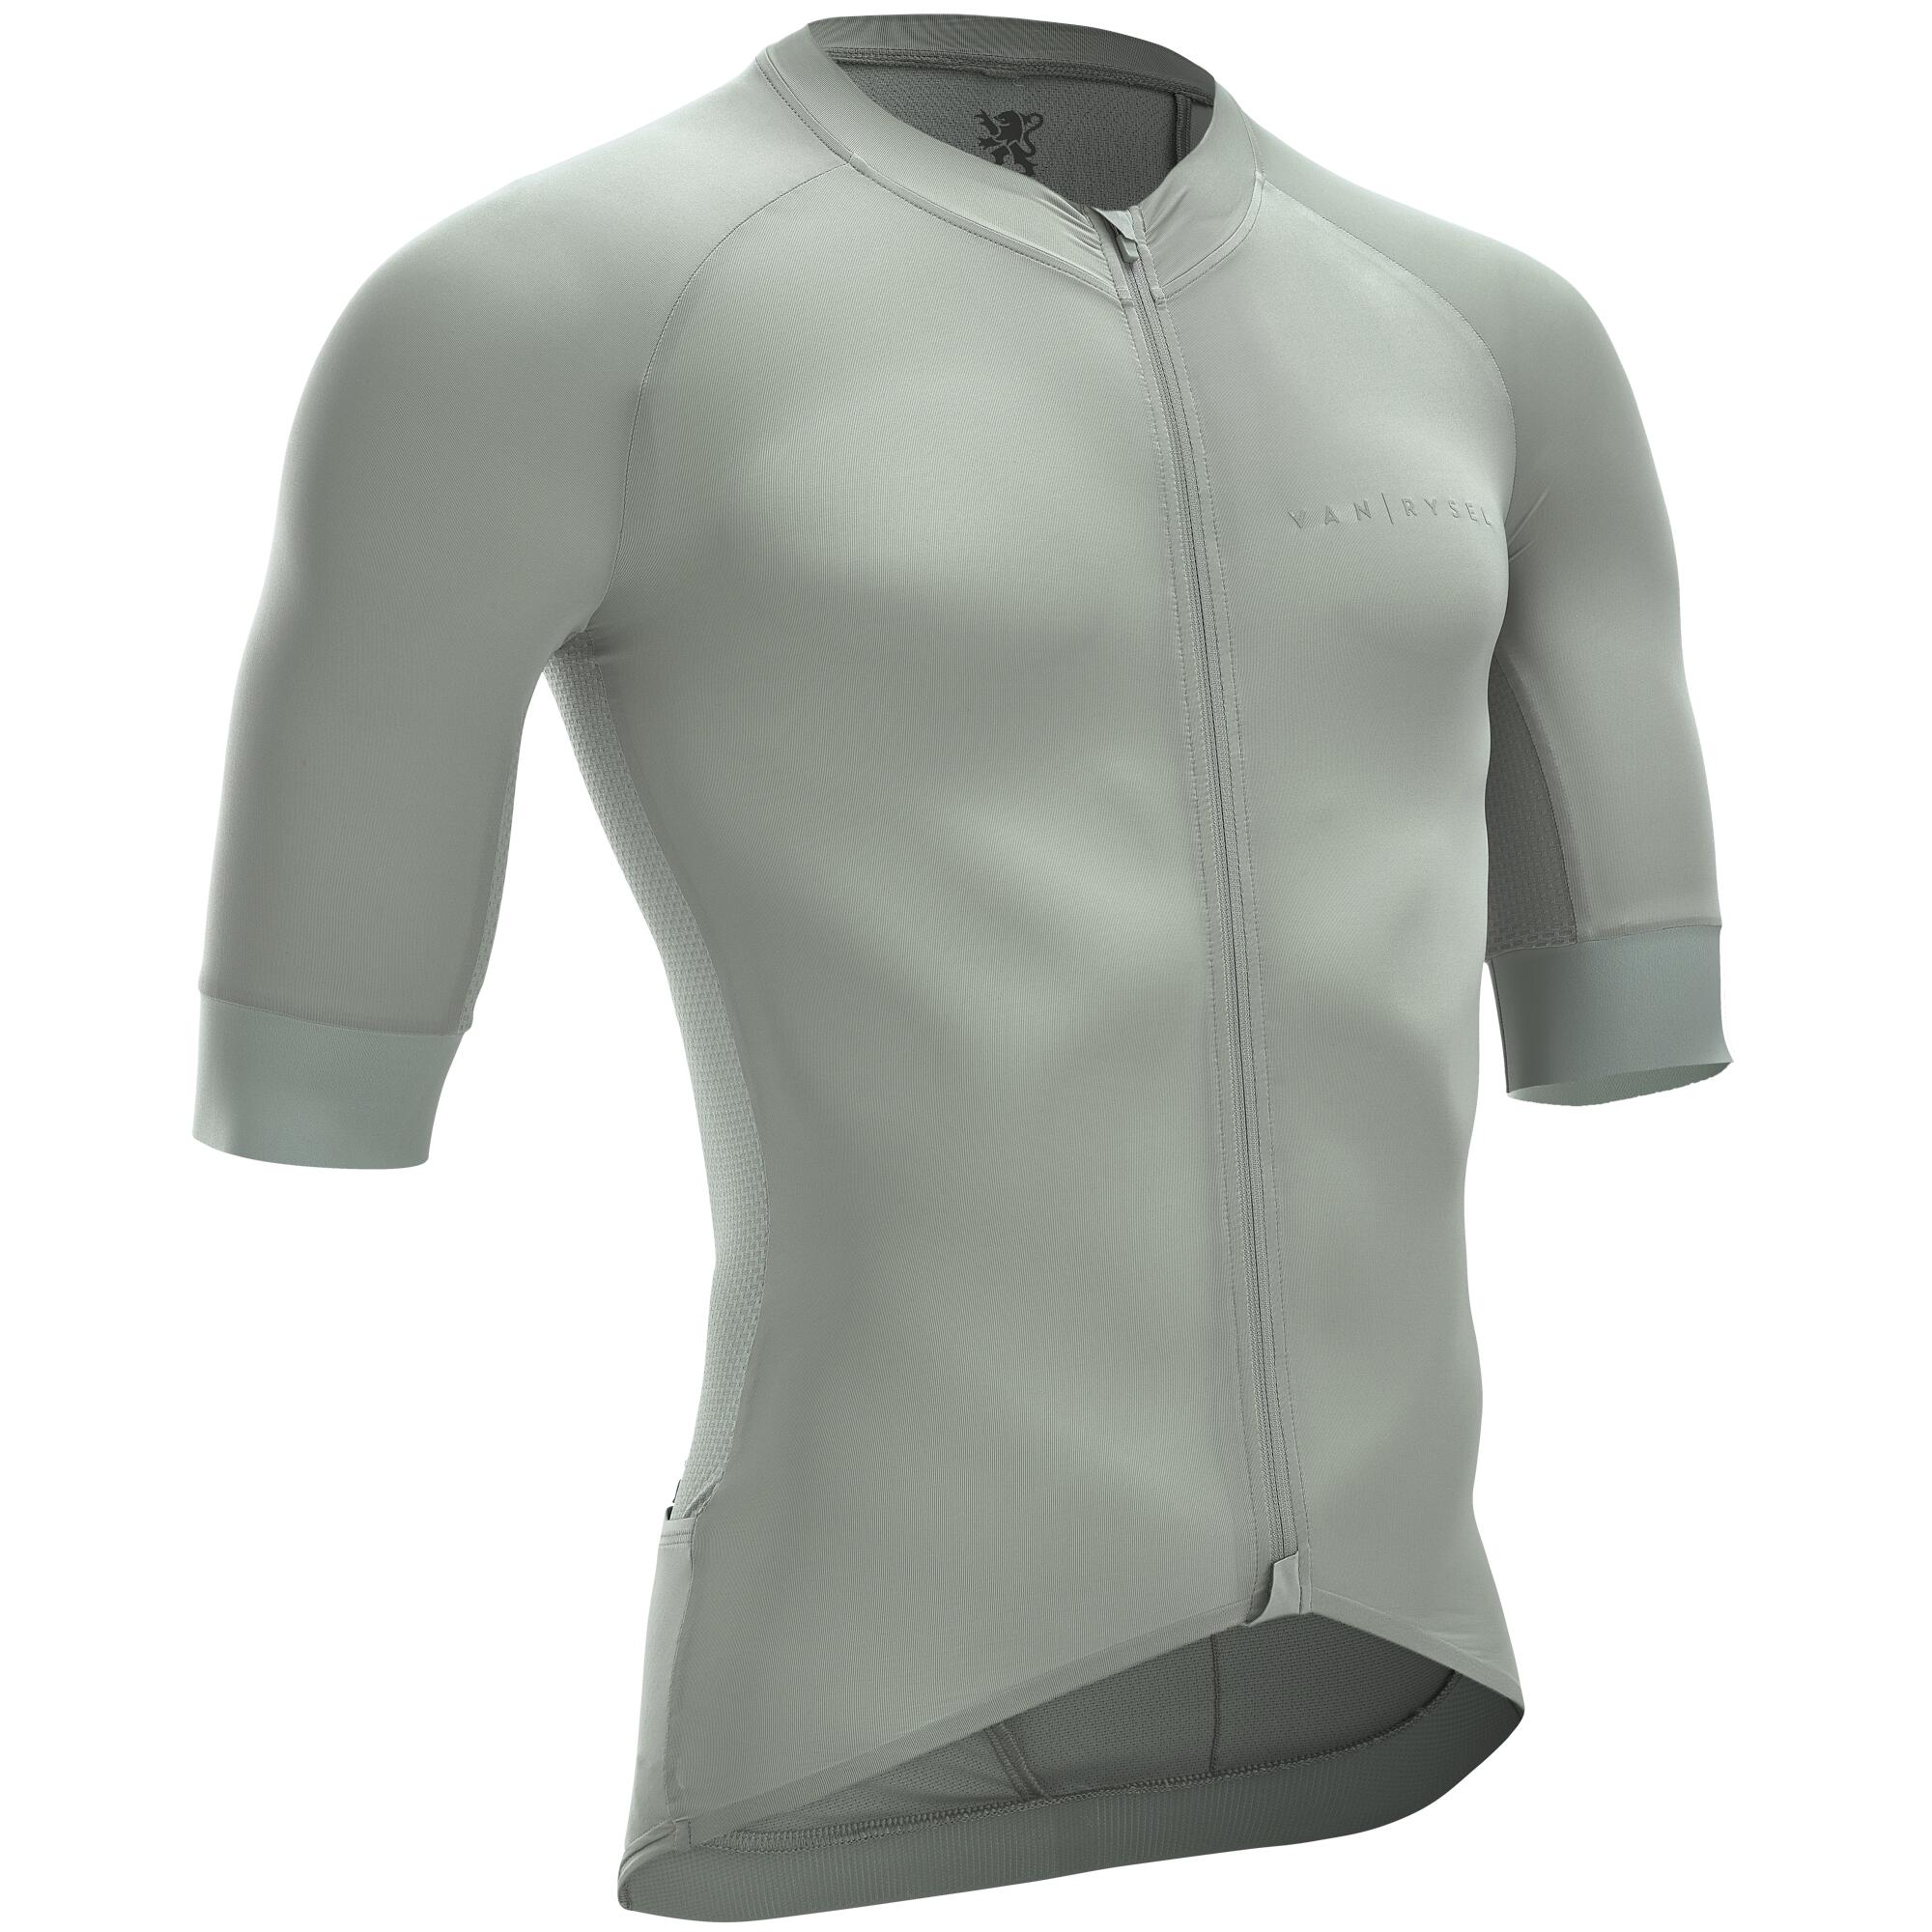 Van Rysel's cold weather kit - Decathlon Van Rysel Cycling Tights + RCR  Long Sleeve Jersey Review 